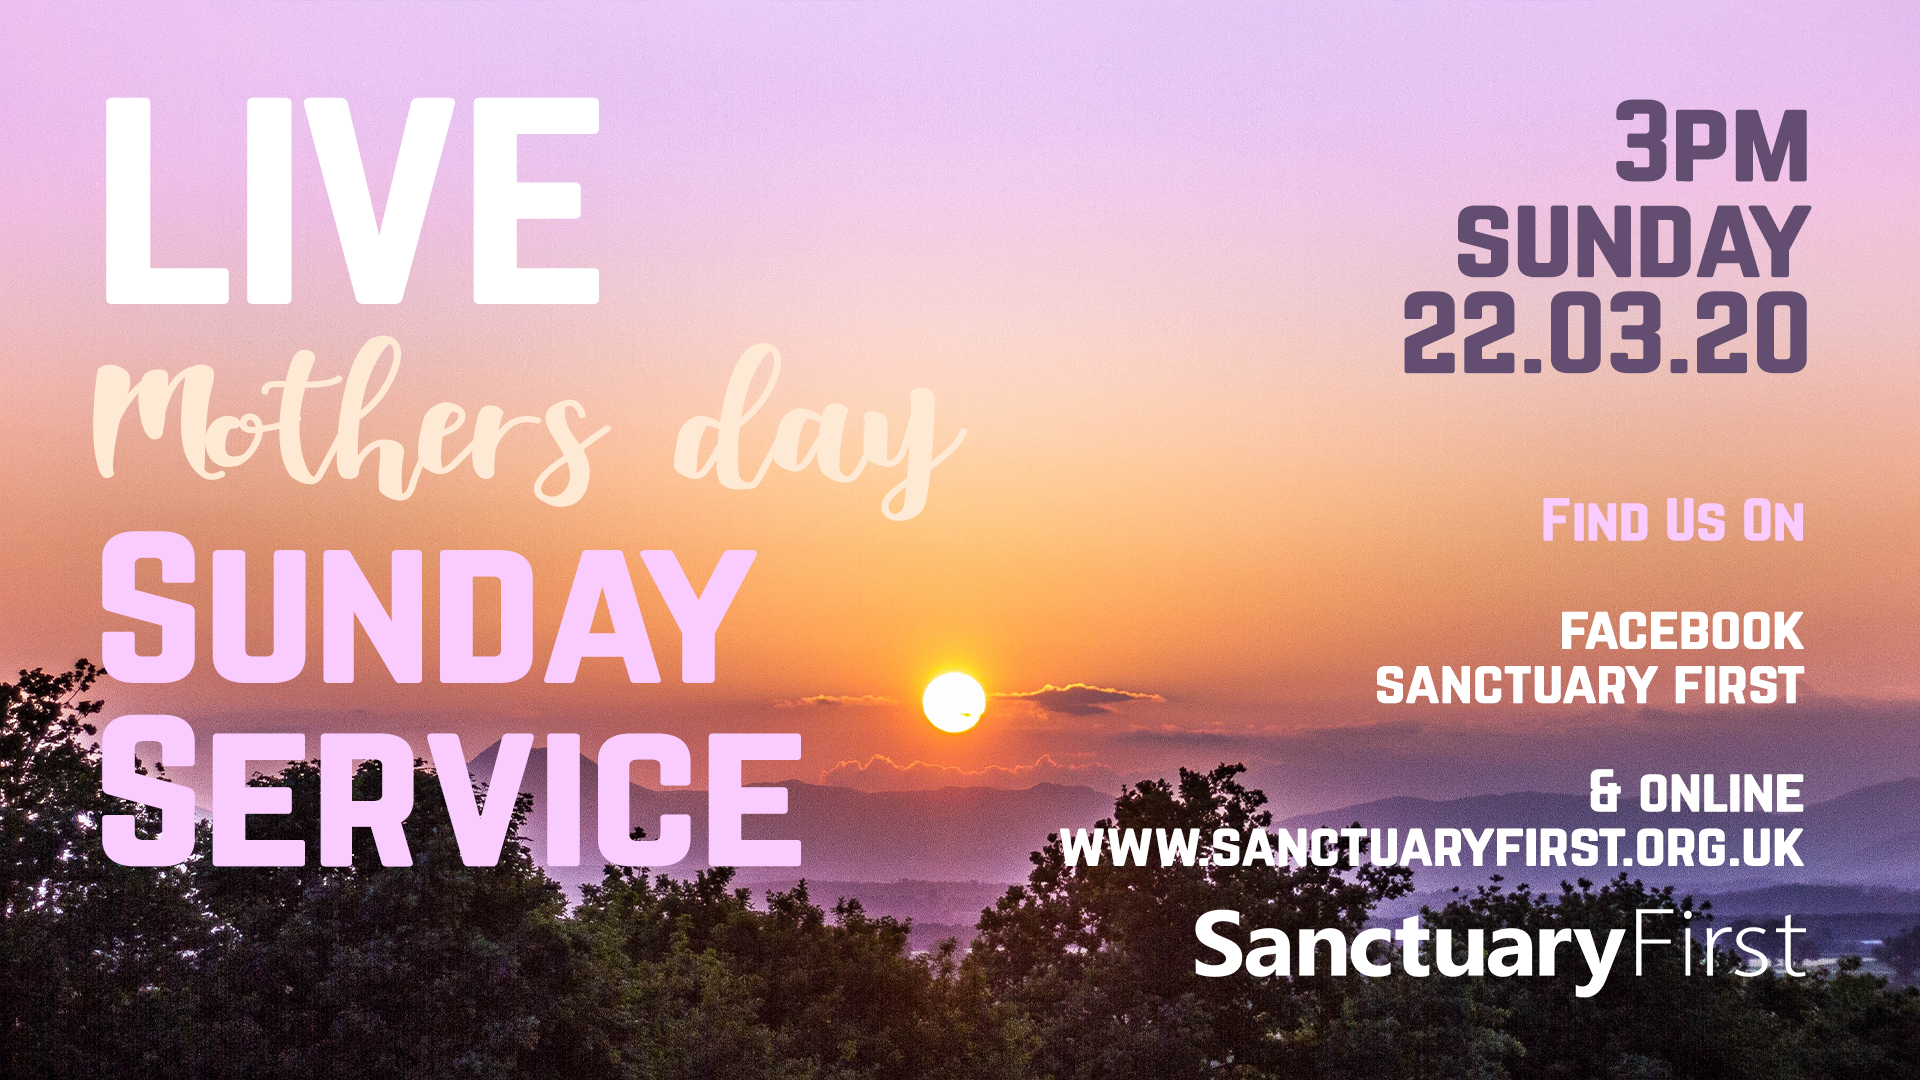 LIVE Sunday Service - 22.03.20